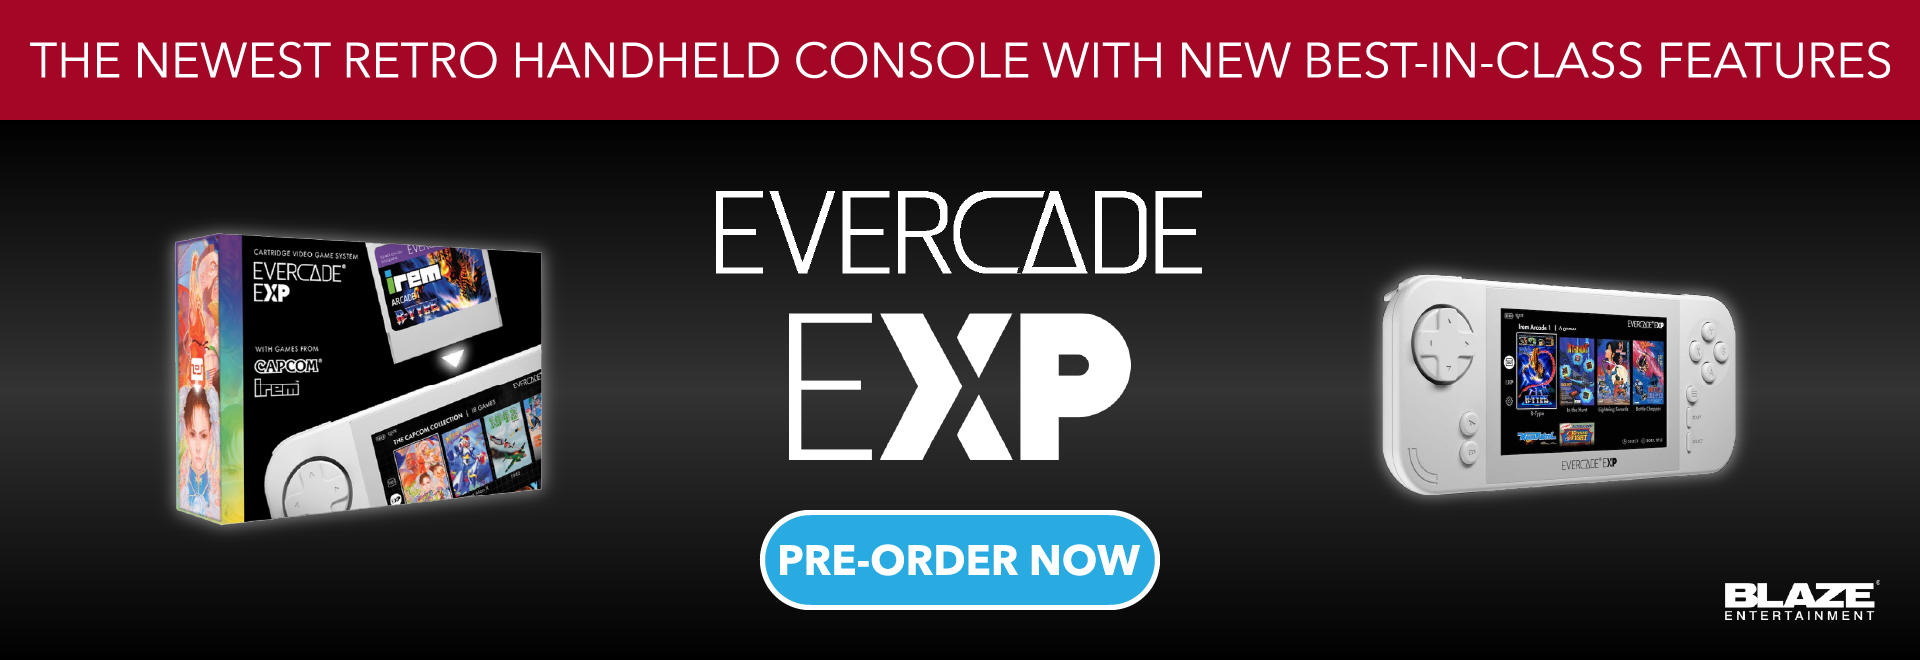 Evercade EXP - The newest retro handheld console!